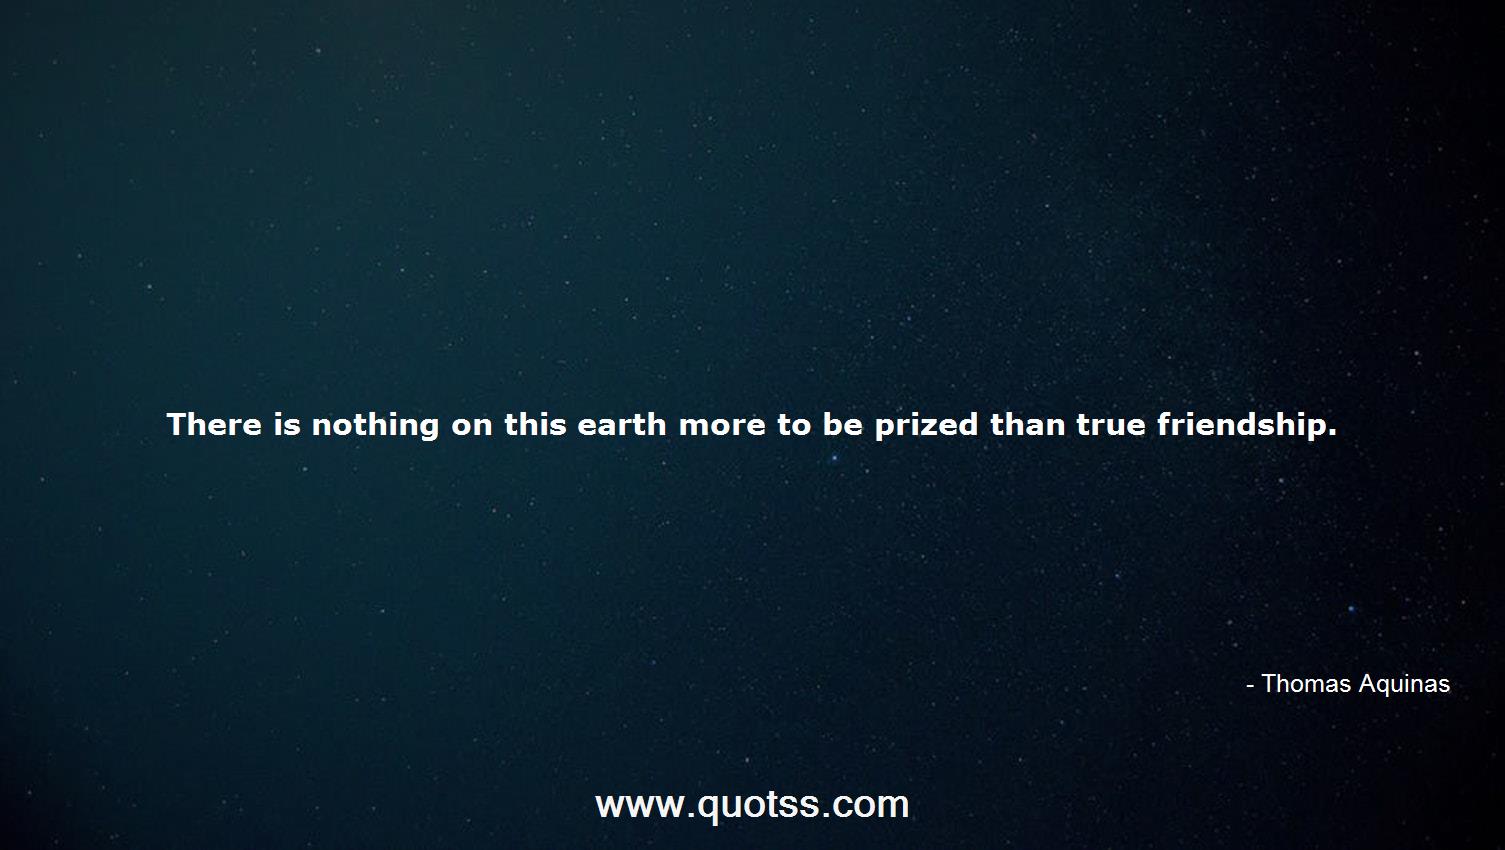 Thomas Aquinas Quote on Quotss